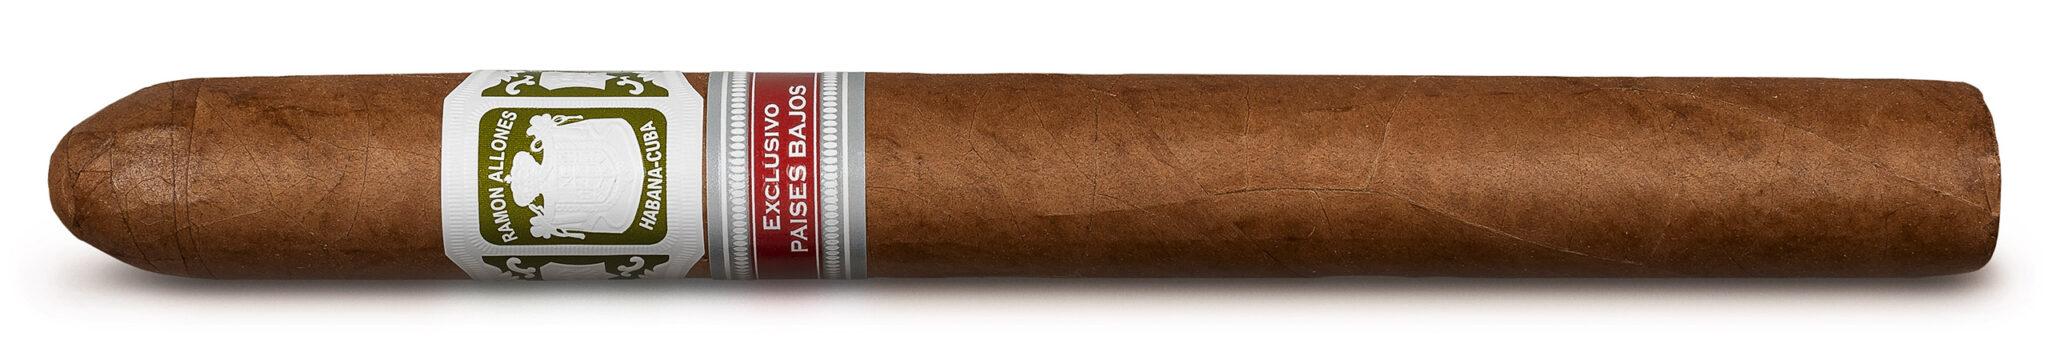 Сигара №7 2022 года по версии Cigarjournal — RAMÓN ALLONES 40 CARAT ER PAÍSES BAJOS